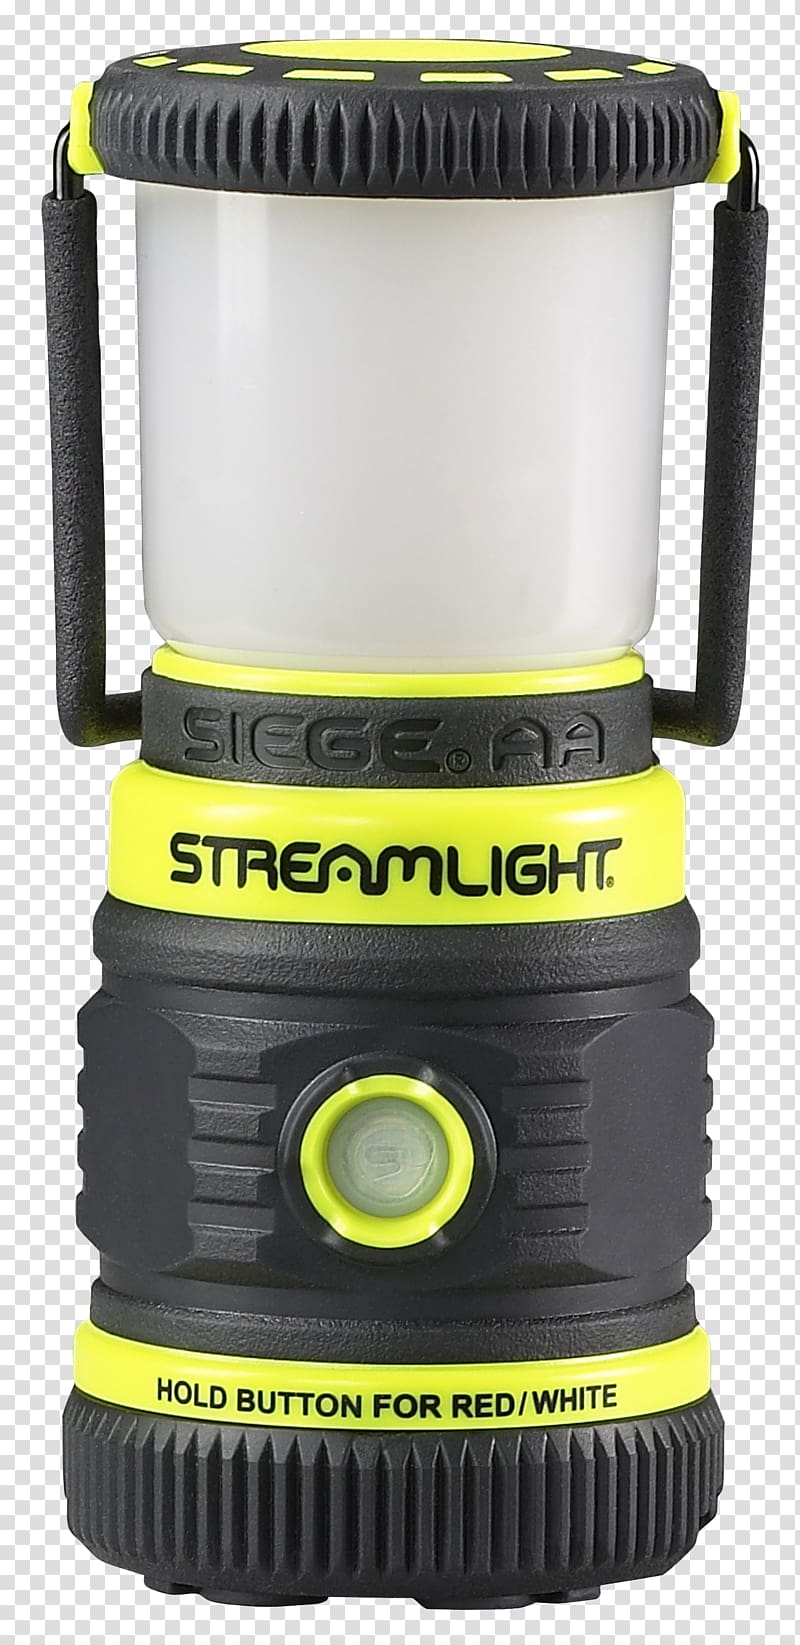 Streamlight, Inc. Lantern Streamlight Super Siege Flashlight, yellow lantern transparent background PNG clipart